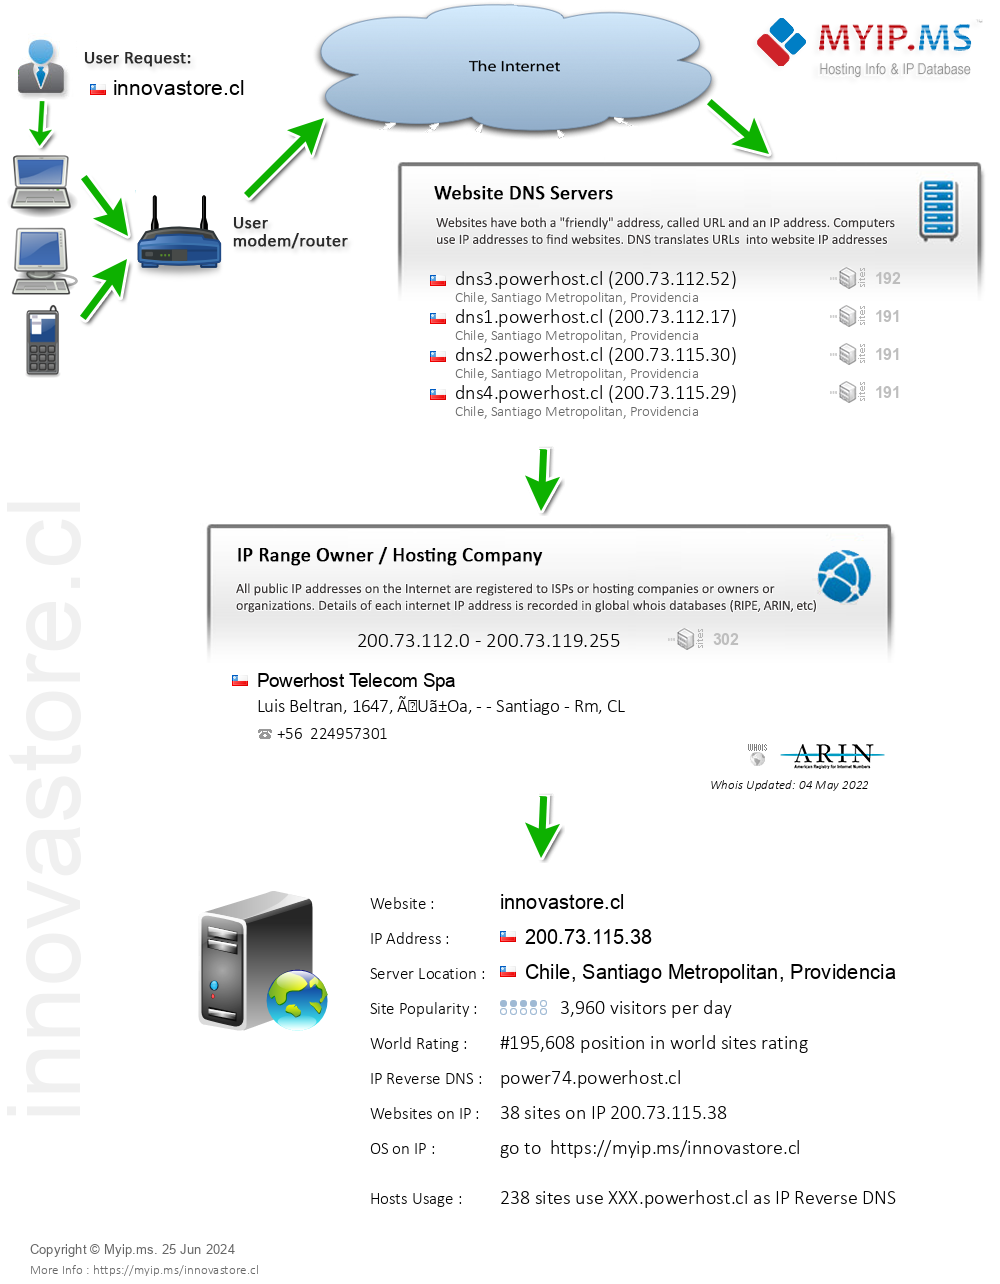 Innovastore.cl - Website Hosting Visual IP Diagram